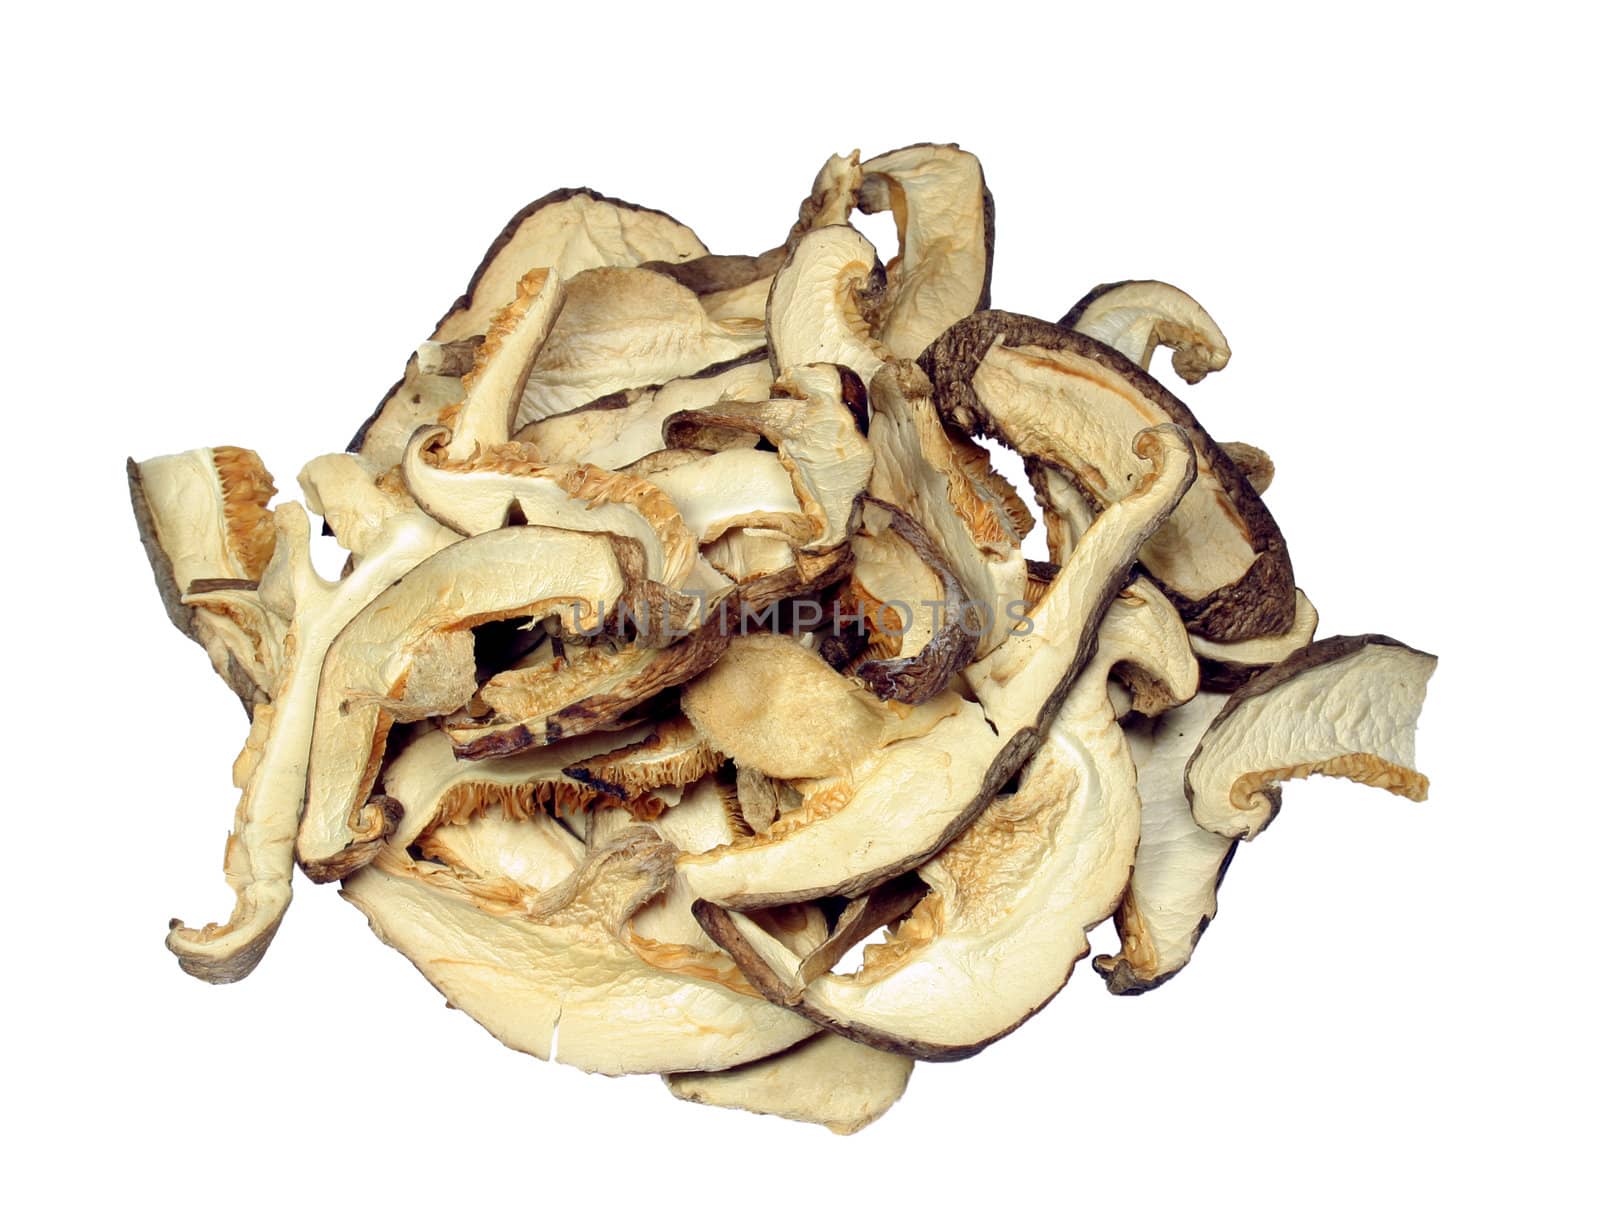 Dried Shiitake mushrooms by hanhepi